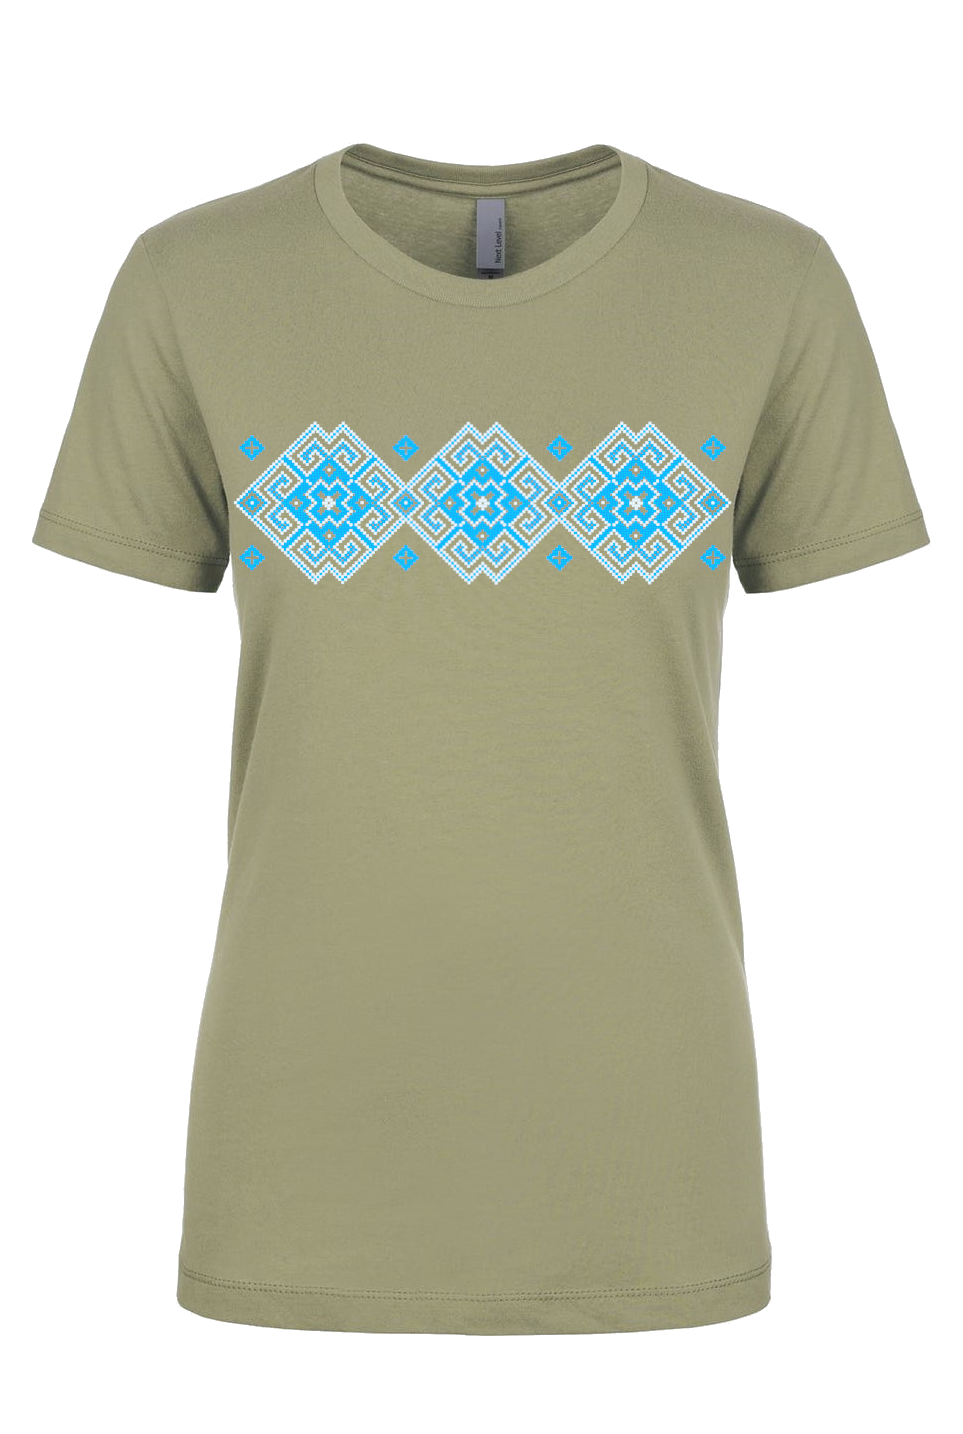 Female fit t-shirt "Vortex" blue